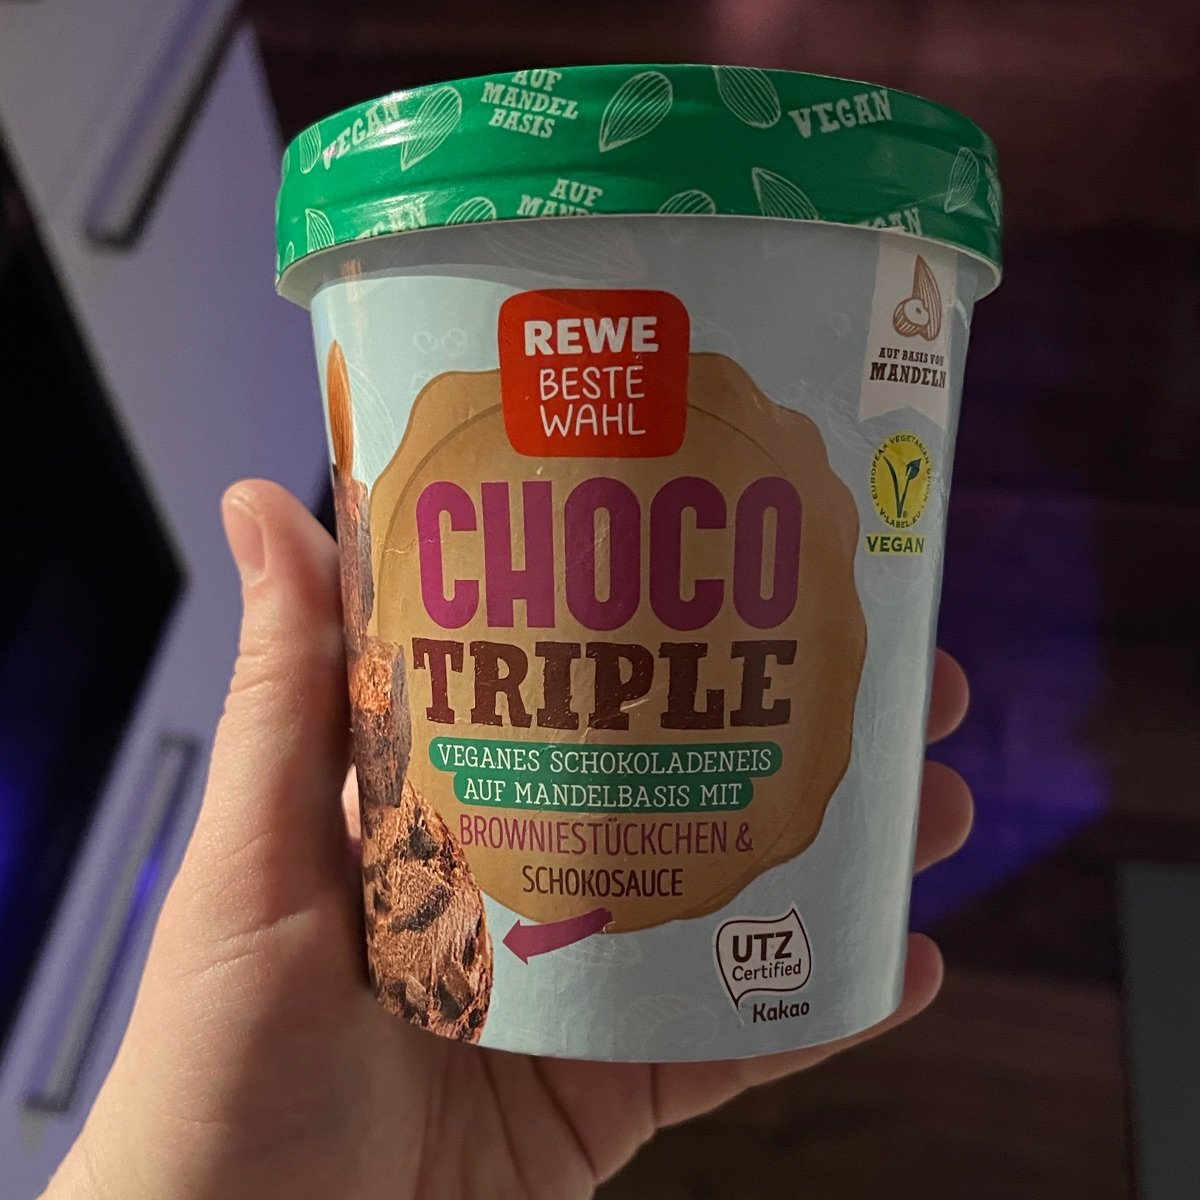 REWE Beste Wahl Choco Triple Ice cream Reviews | abillion